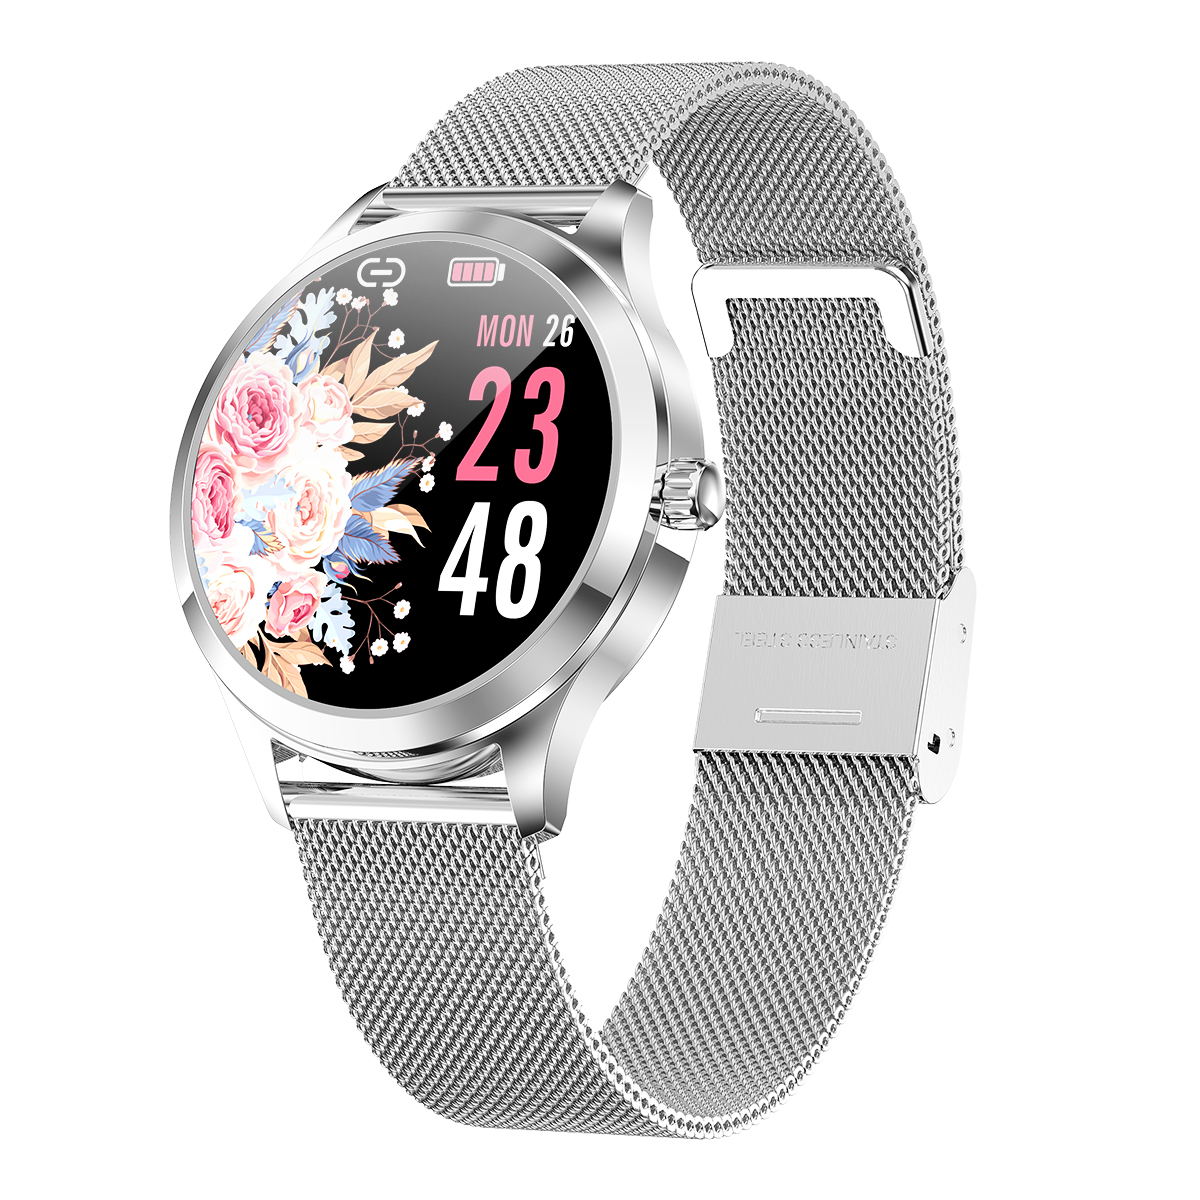 Cмарт-часы Smart Watch LW07